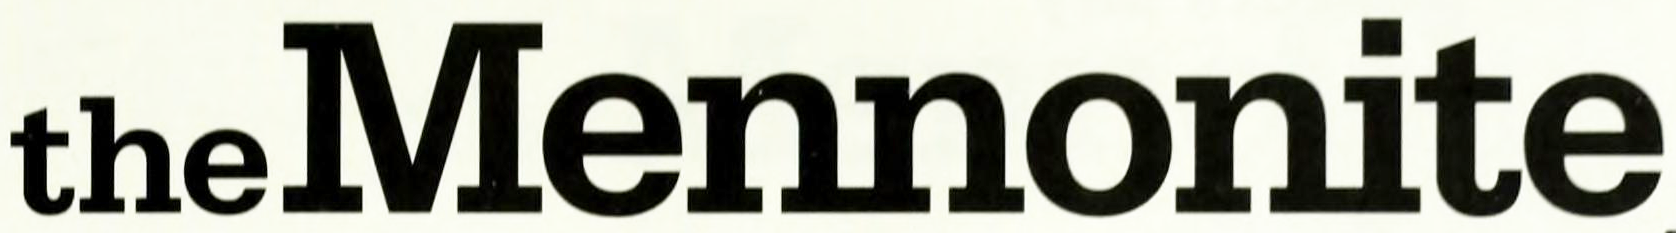 “The Mennonite” logo, circa 1998